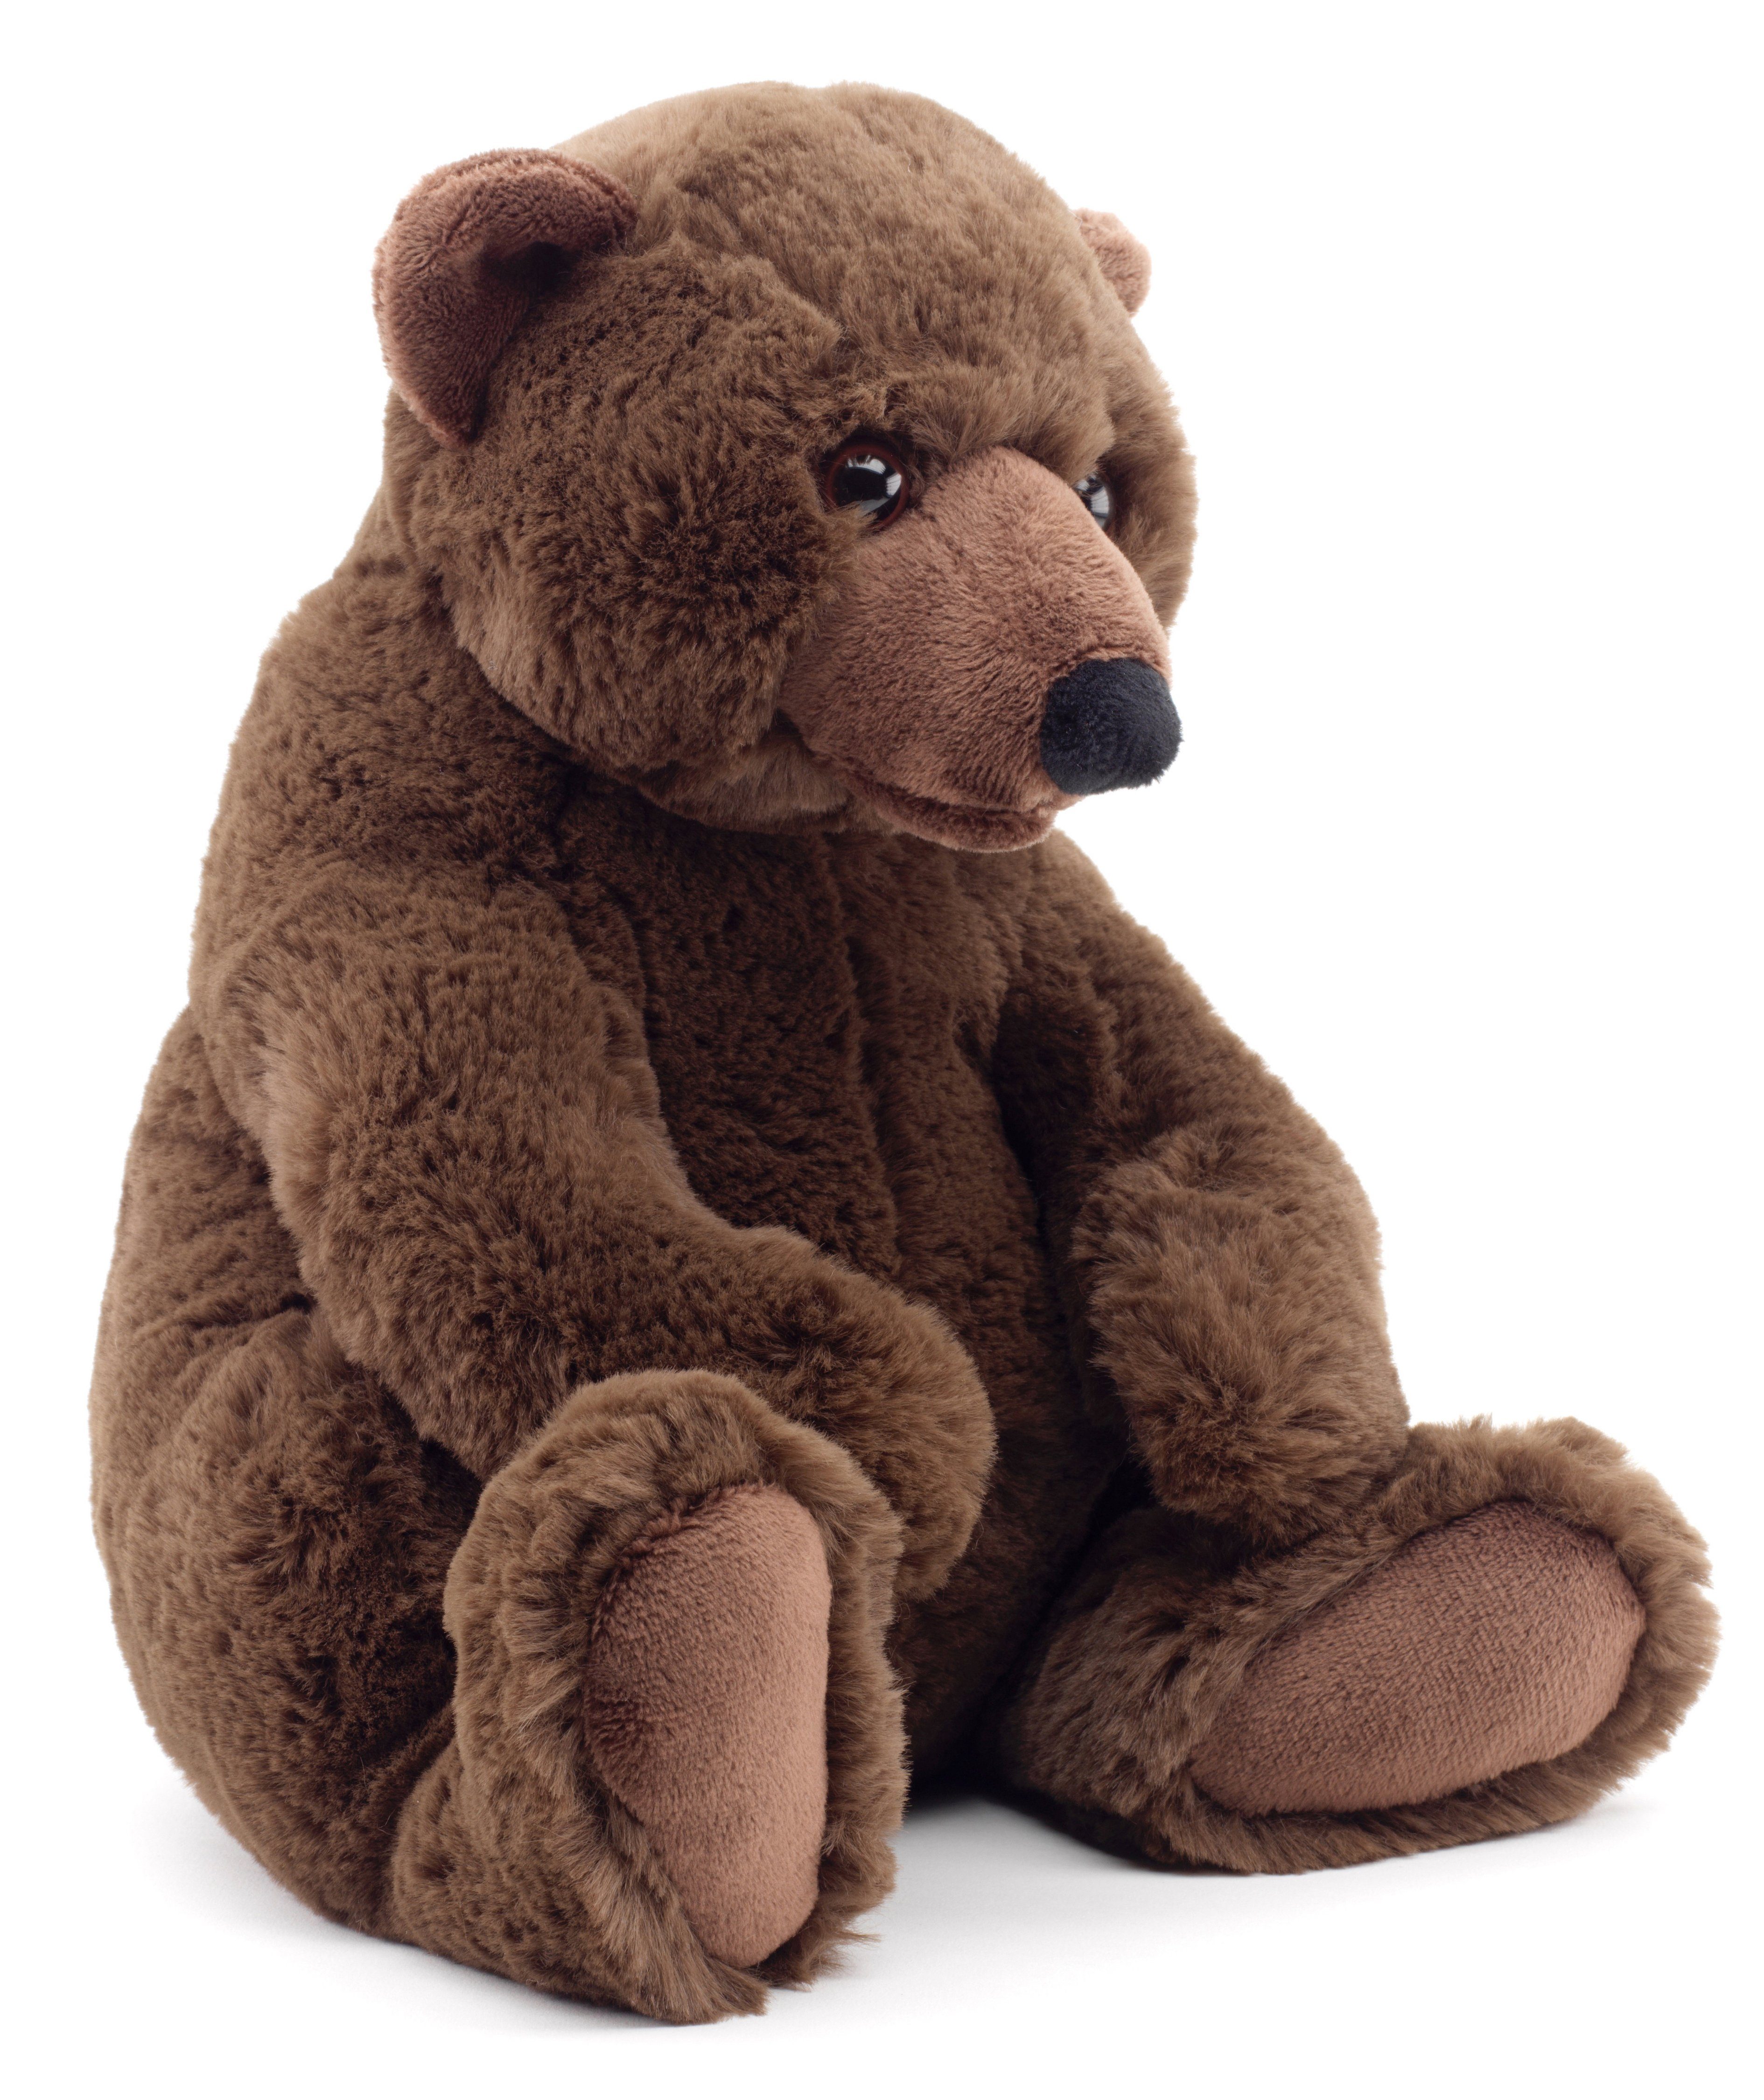 27 Uni-Toys % Braunbär Teddy, Teddybär, zu "Maxi", recyceltes cm Plüsch-Bär, Füllmaterial superweich 100 - Kuscheltier - -